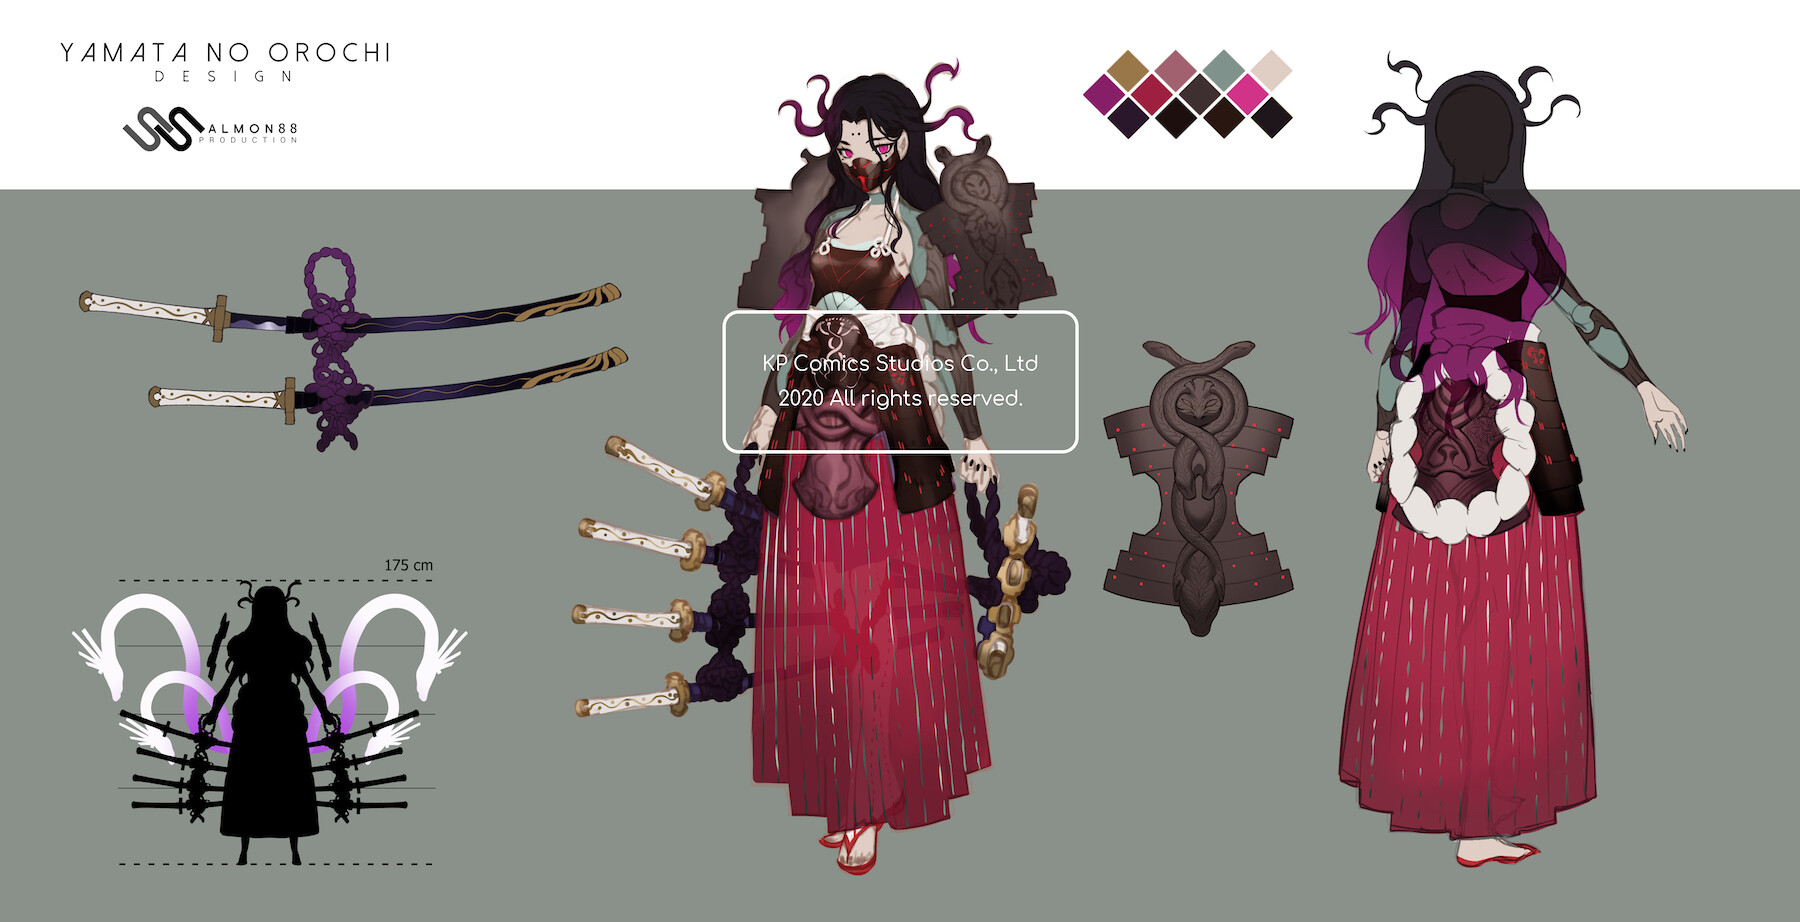 ArtStation - Yamata No Orochi Character Design